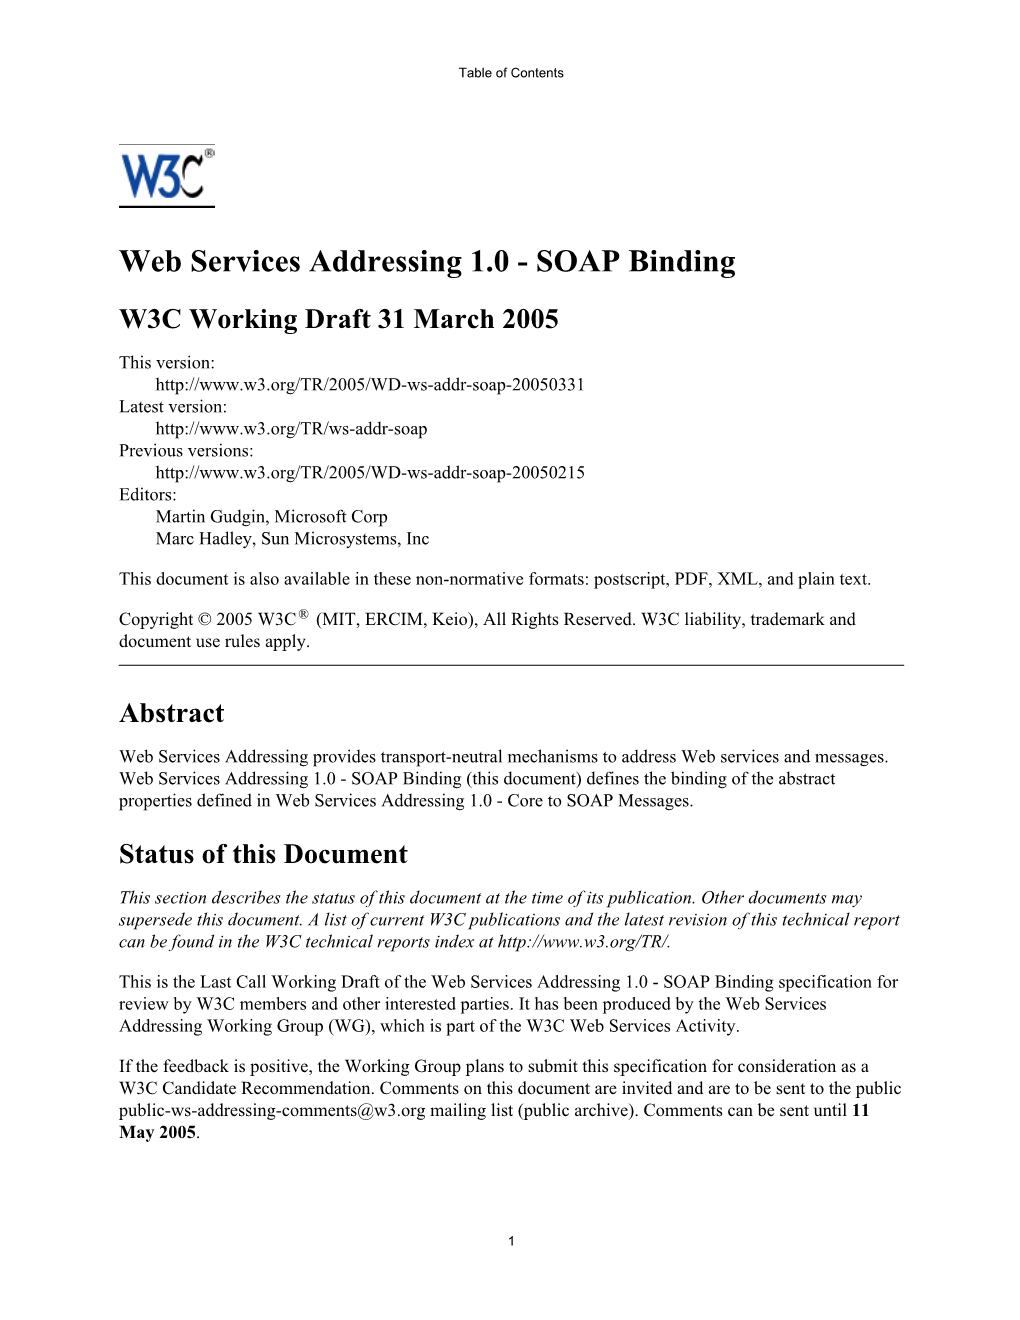 SOAP Binding W3C Working Draft 31 March 2005